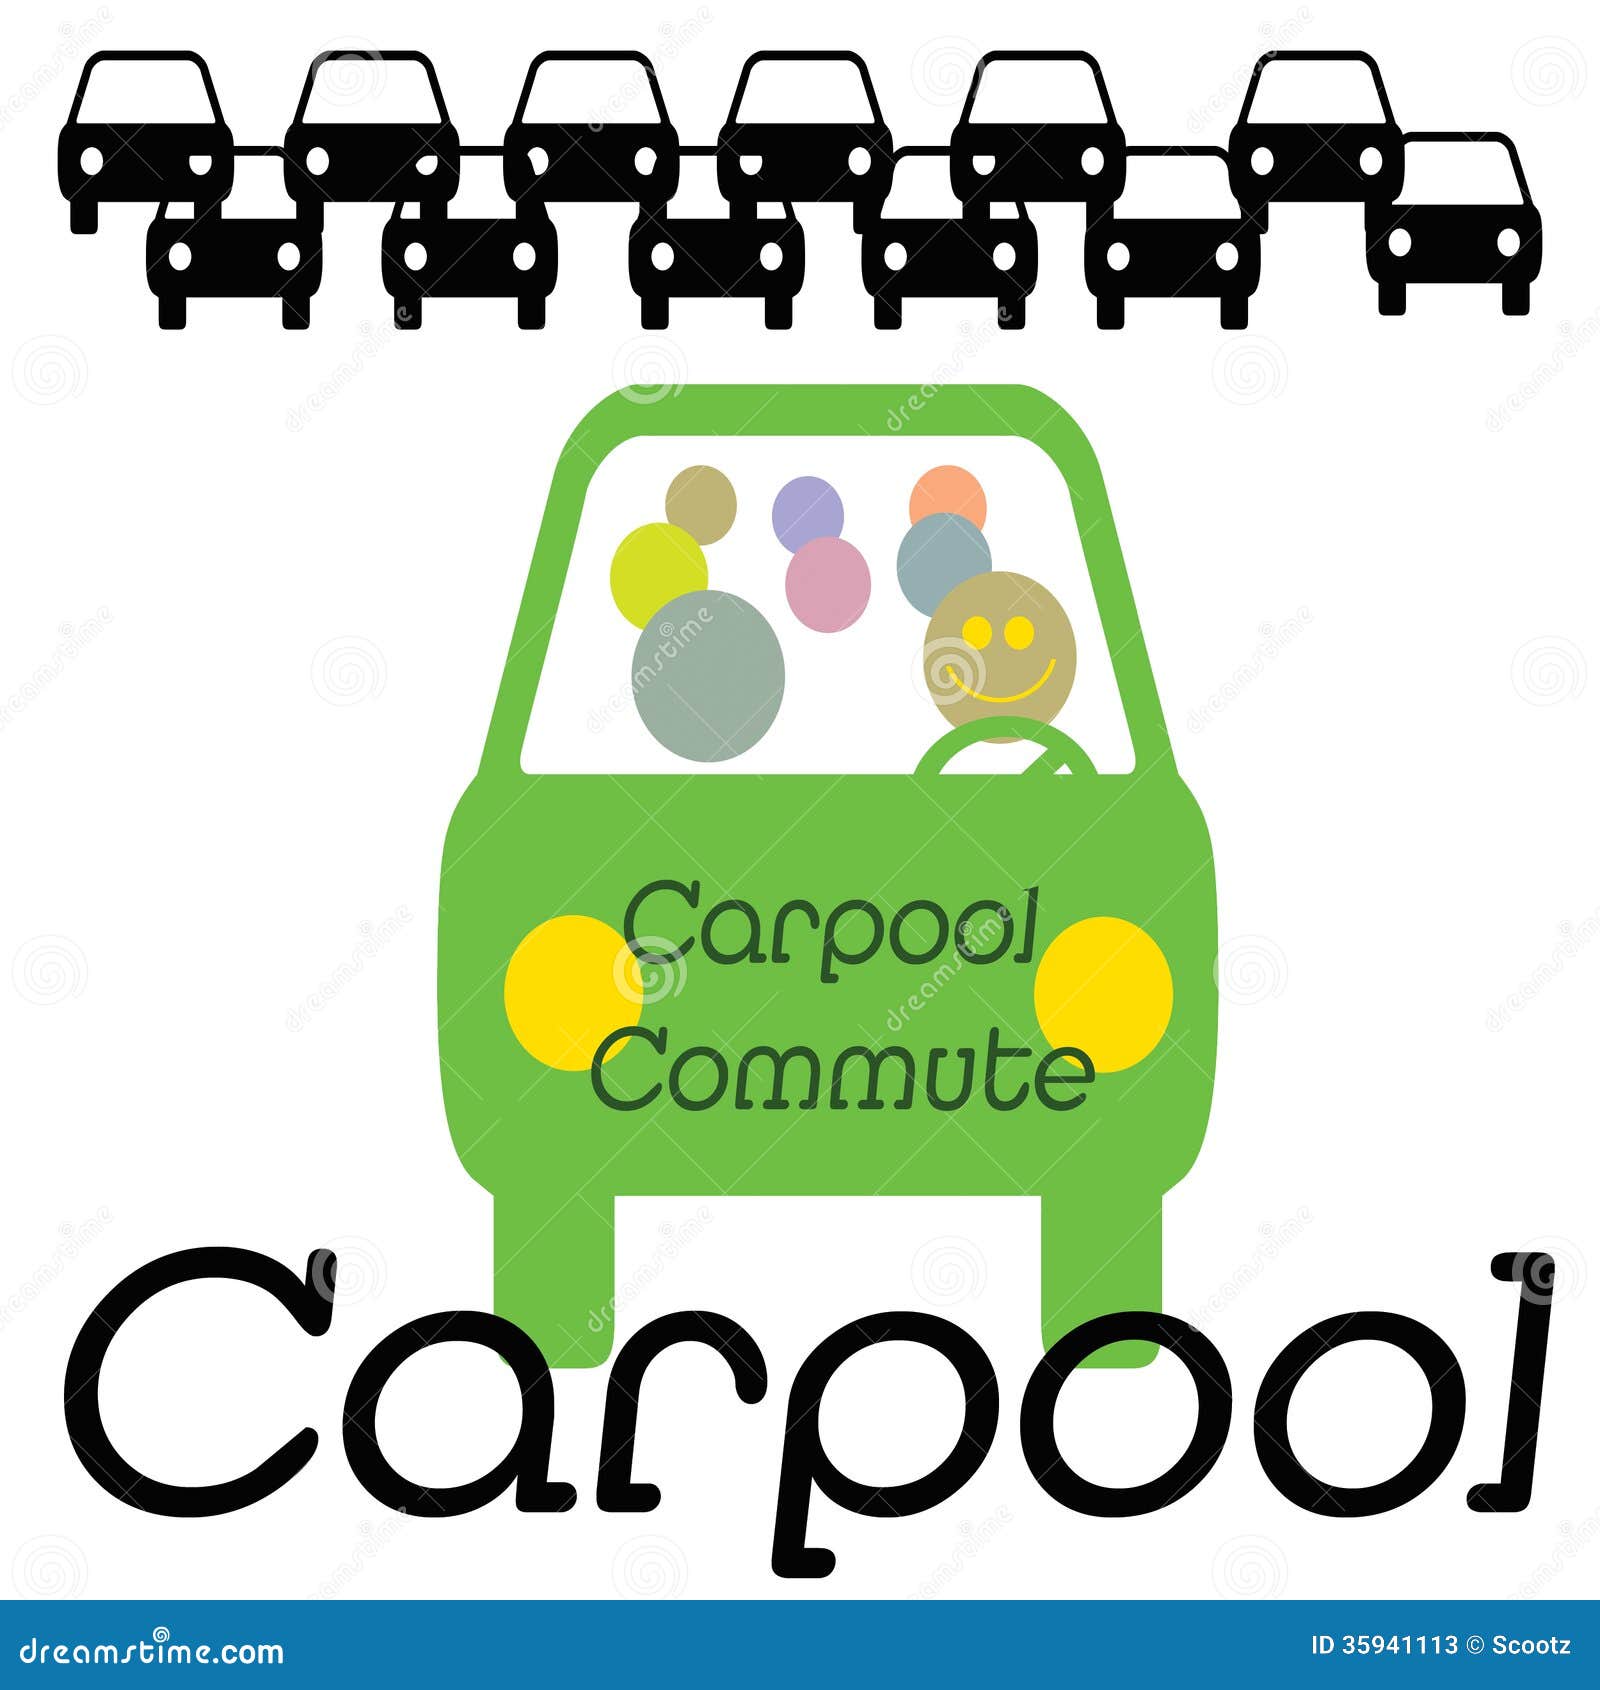 carpool clipart - photo #26